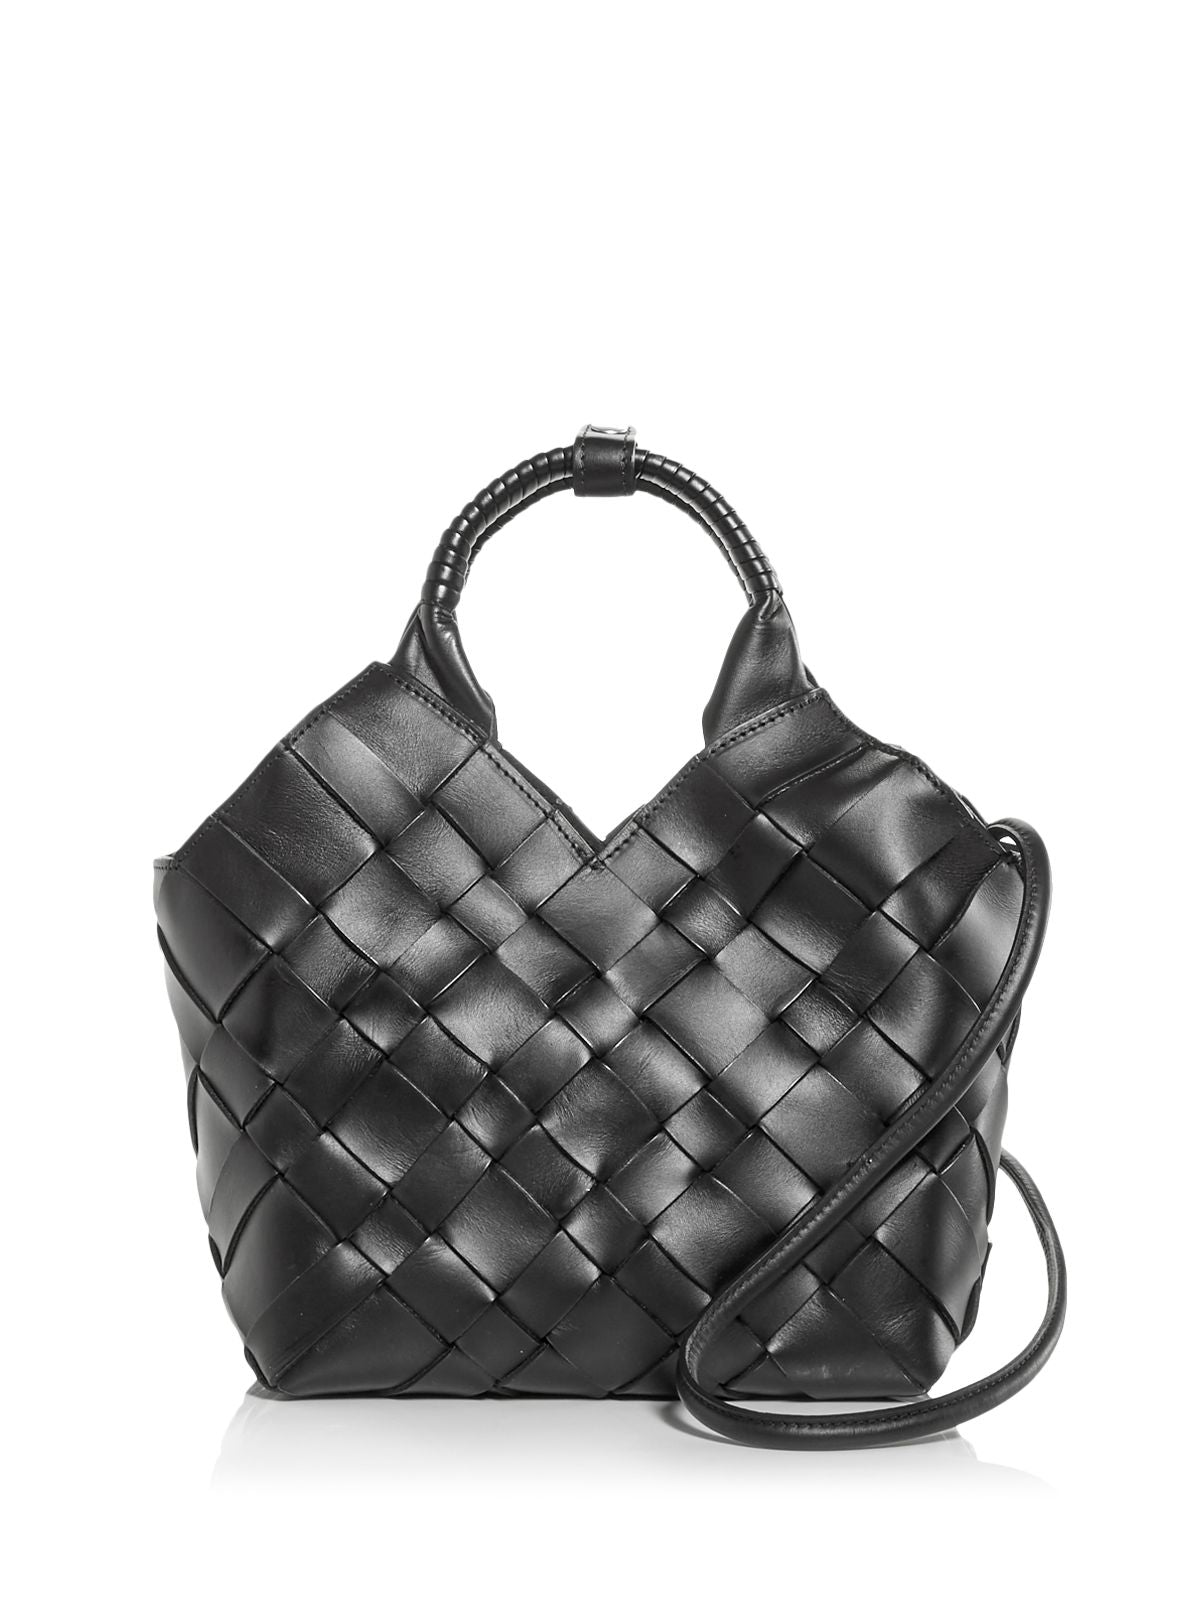 CALAJADE Women's Black Solid Leather Top Handle 10In Removable Interior Drawstring Bag Woven Single Strap Shoulder Bag